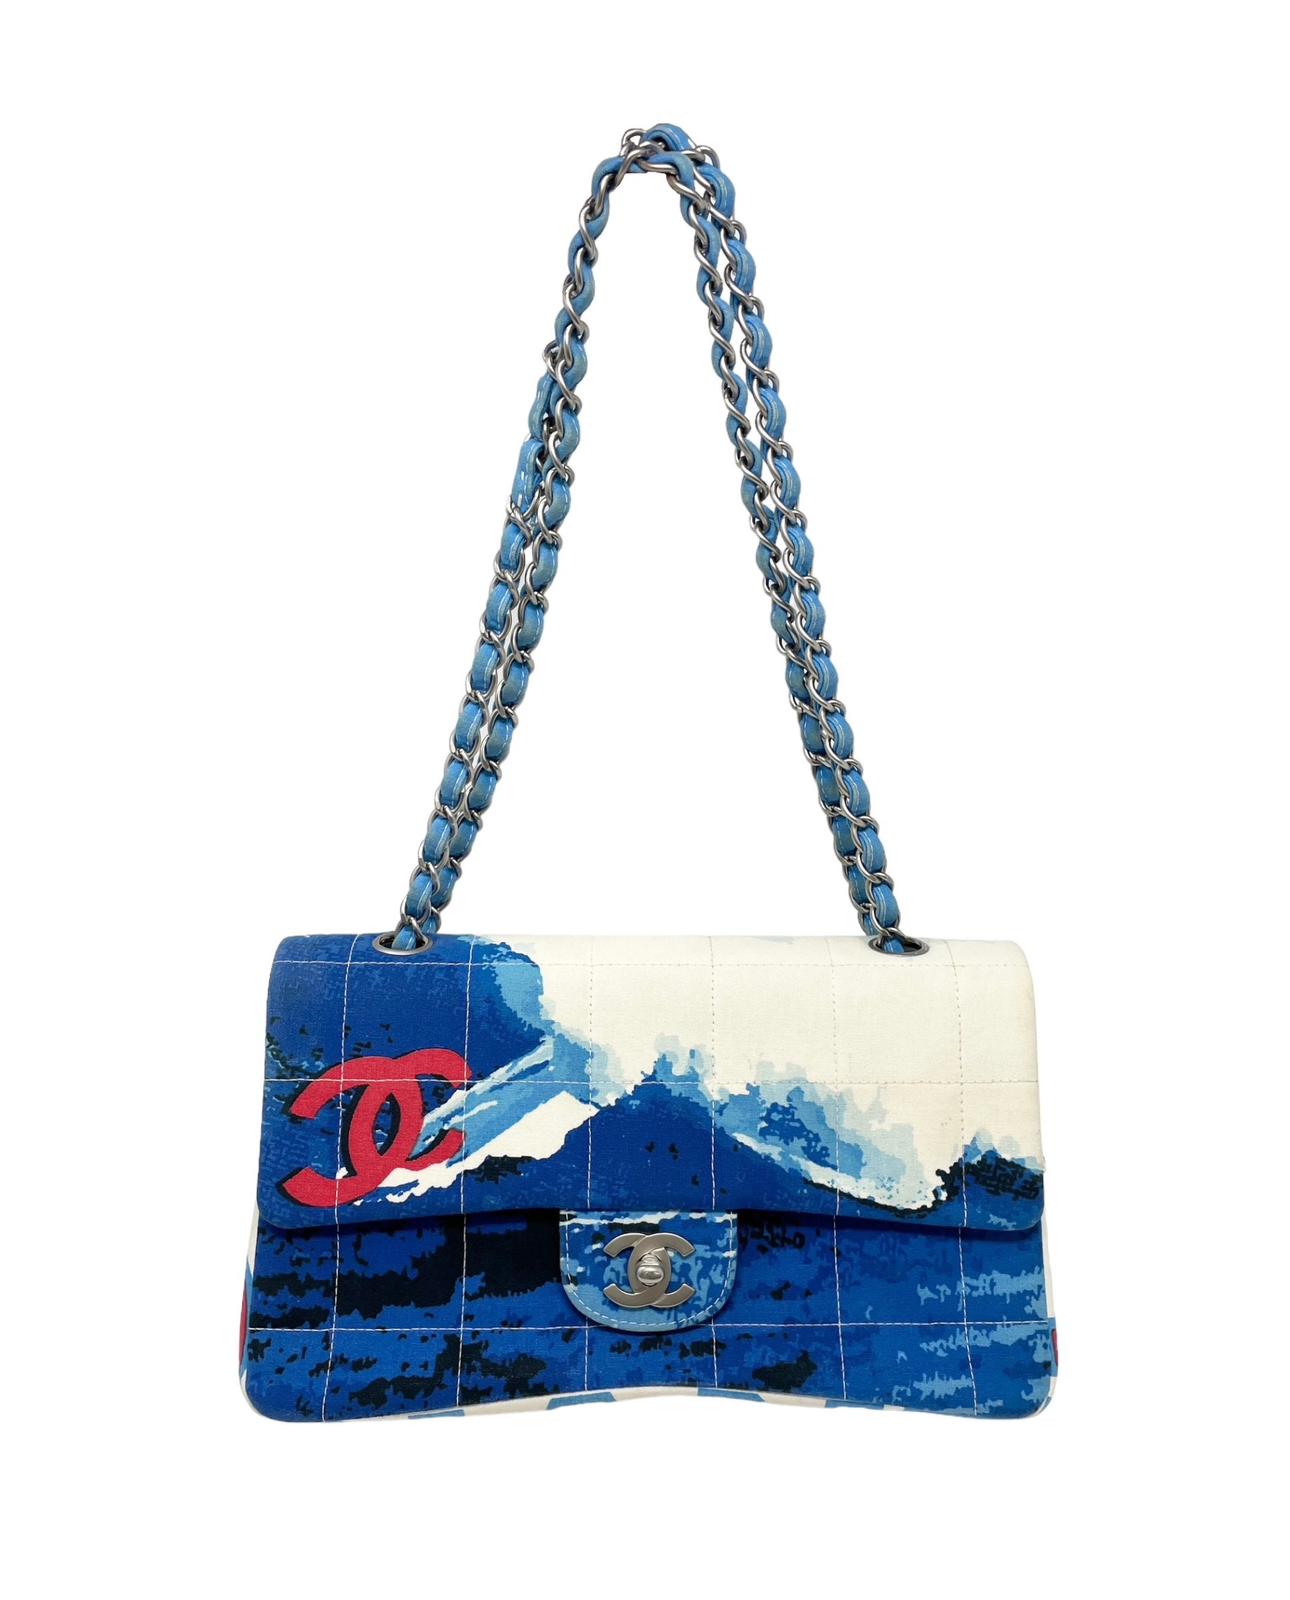 Treasures of NYC - Chanel Surf Flap Bag